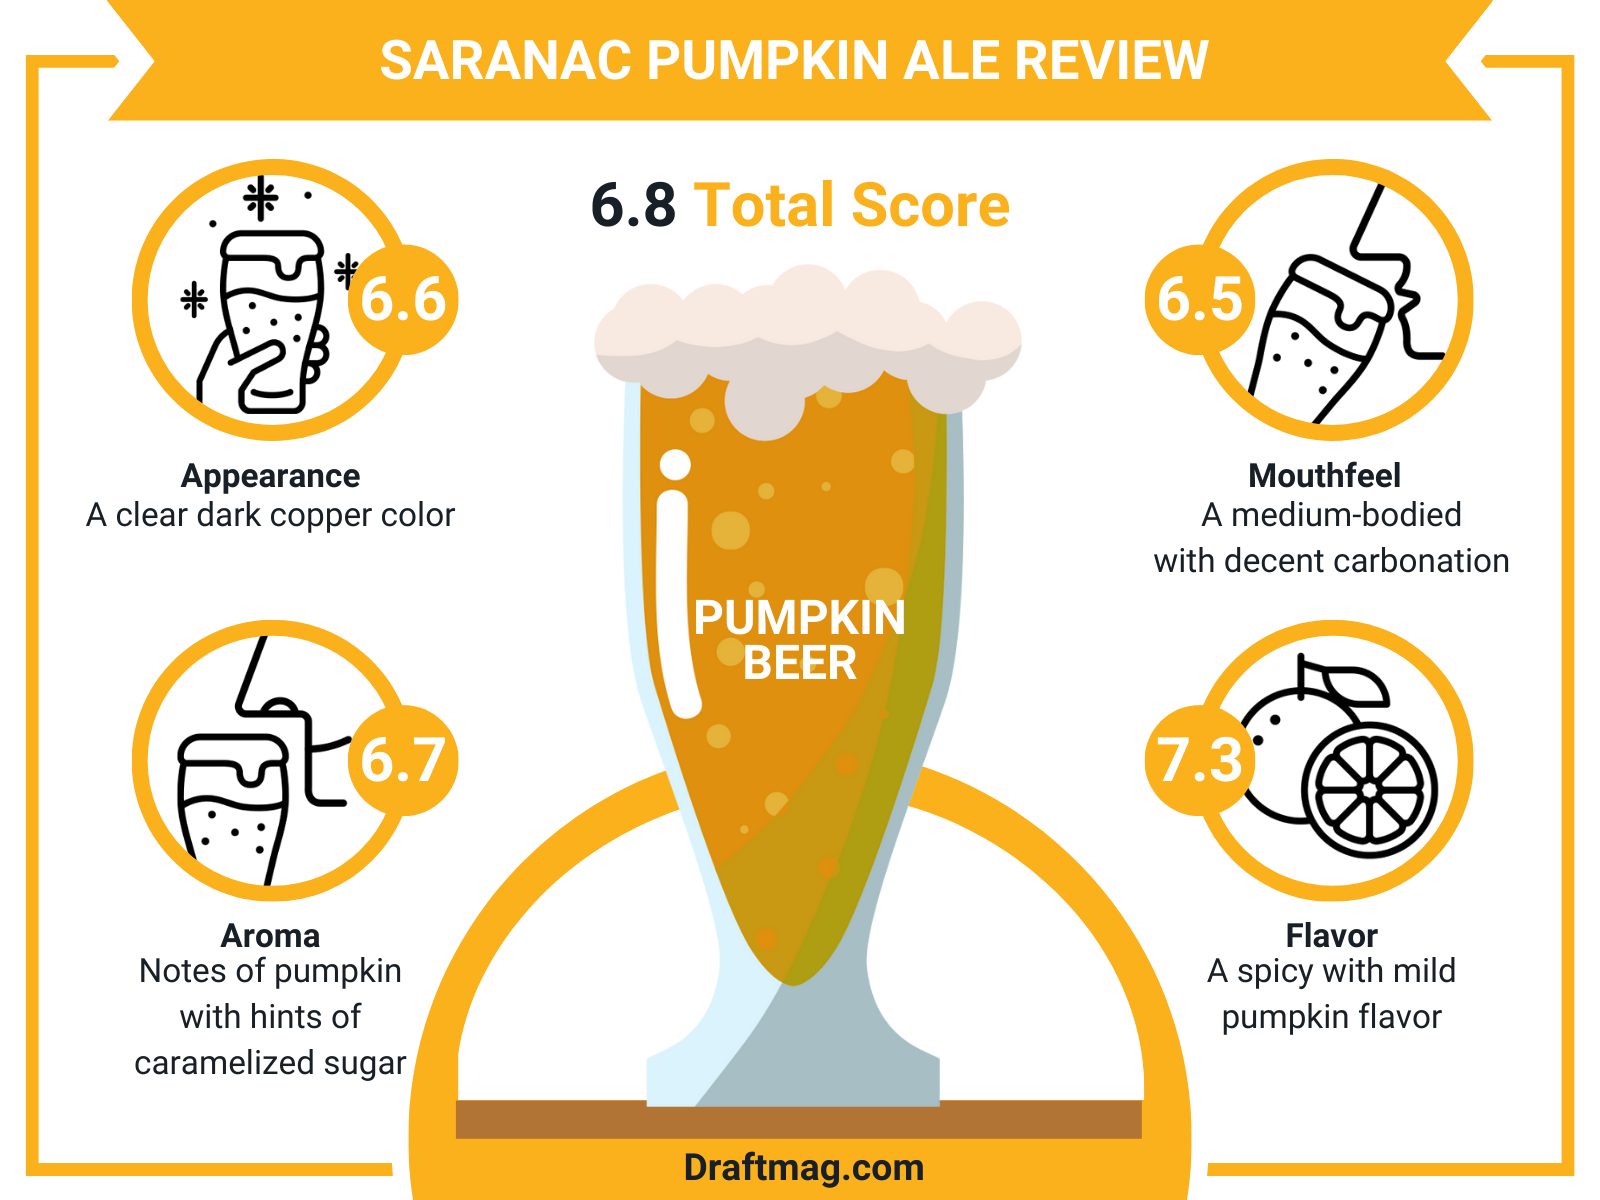 Saranac Pumpkin Ale Review Infographic